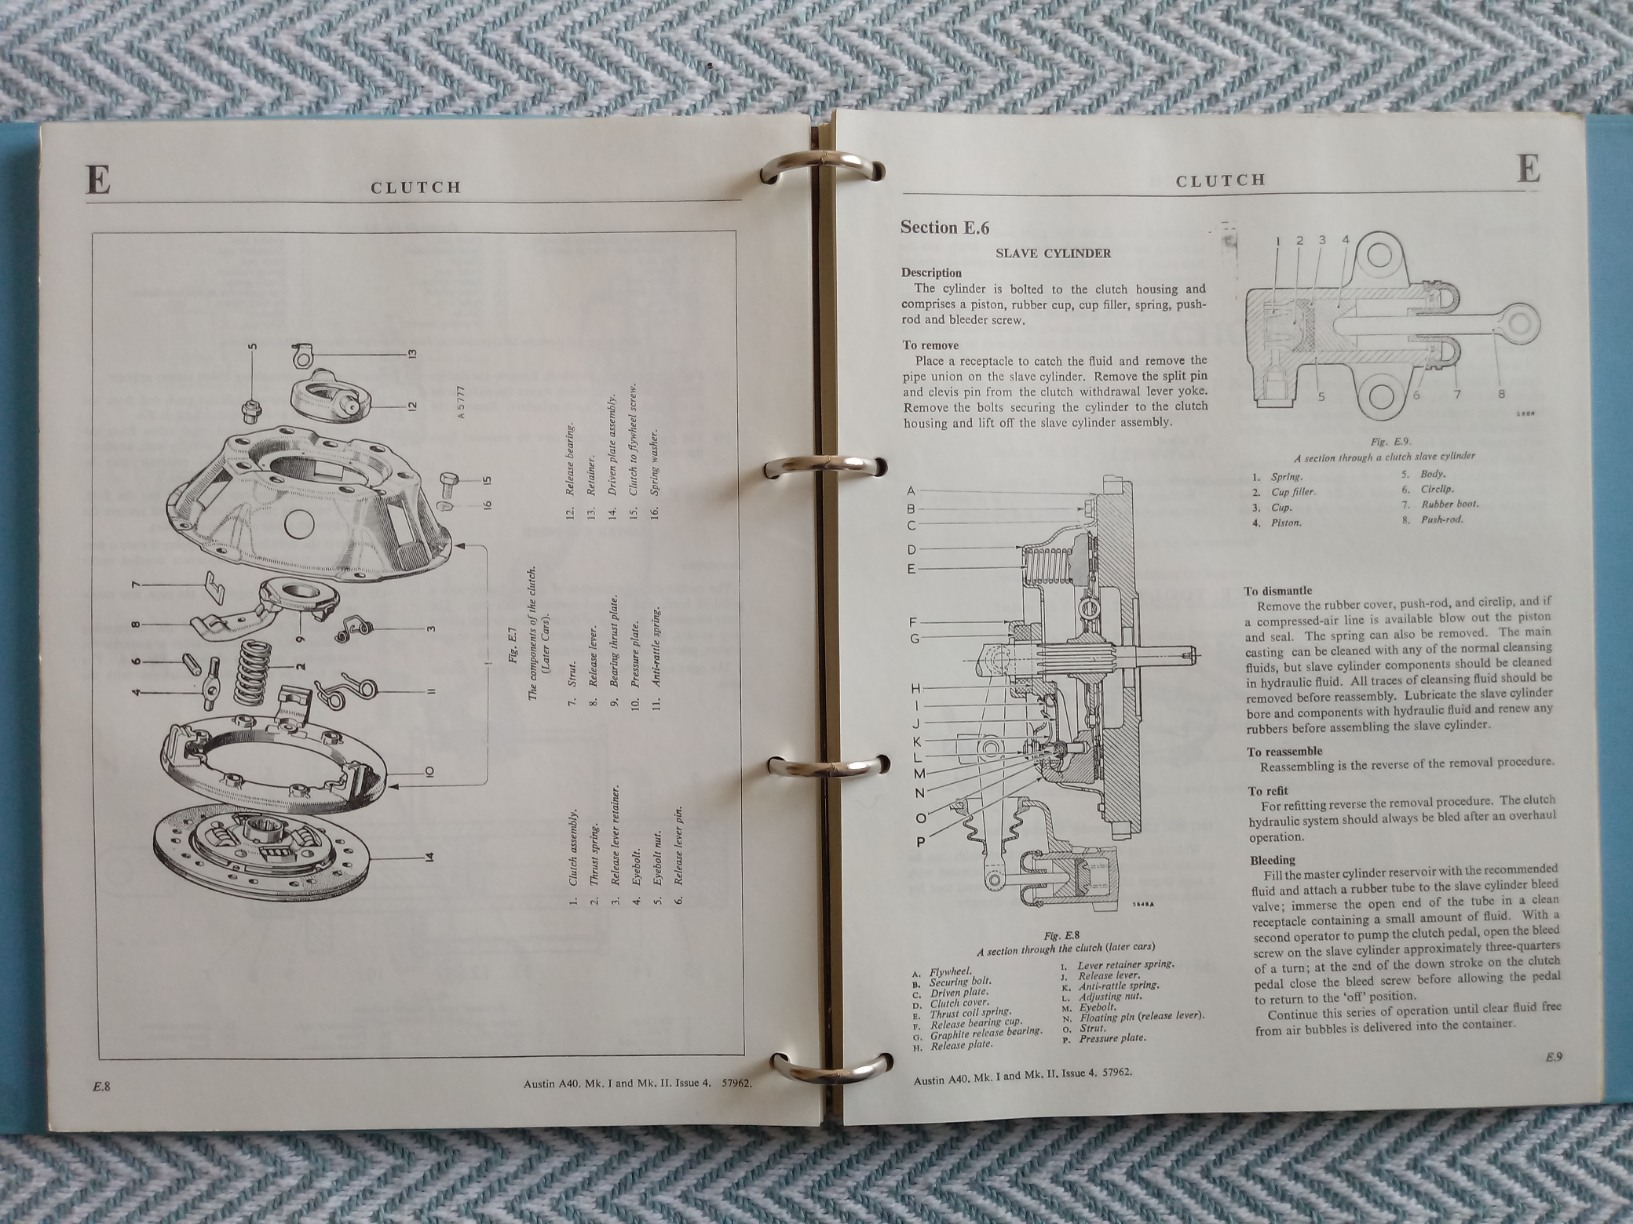 Austin A40 Marks I & II Workshop Manual ring binder Published 1964 The British Motor Corporation - Image 3 of 4